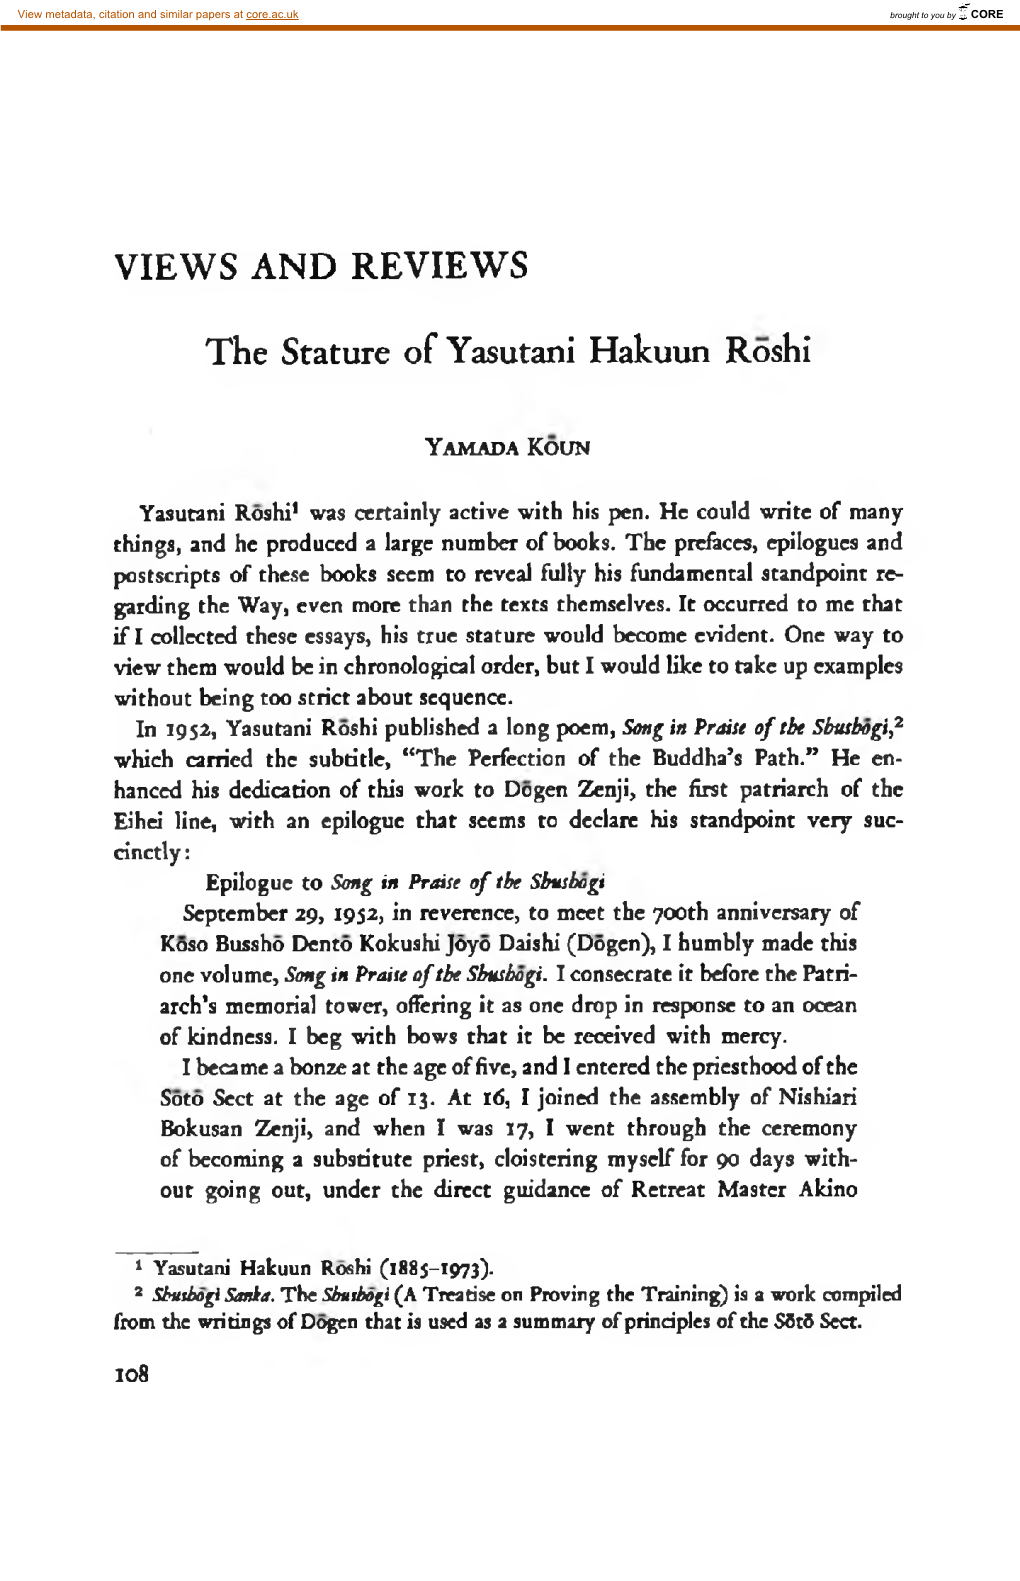 VIEWS and REVIEWS the Stature of Yasutani Hakuun Roshi